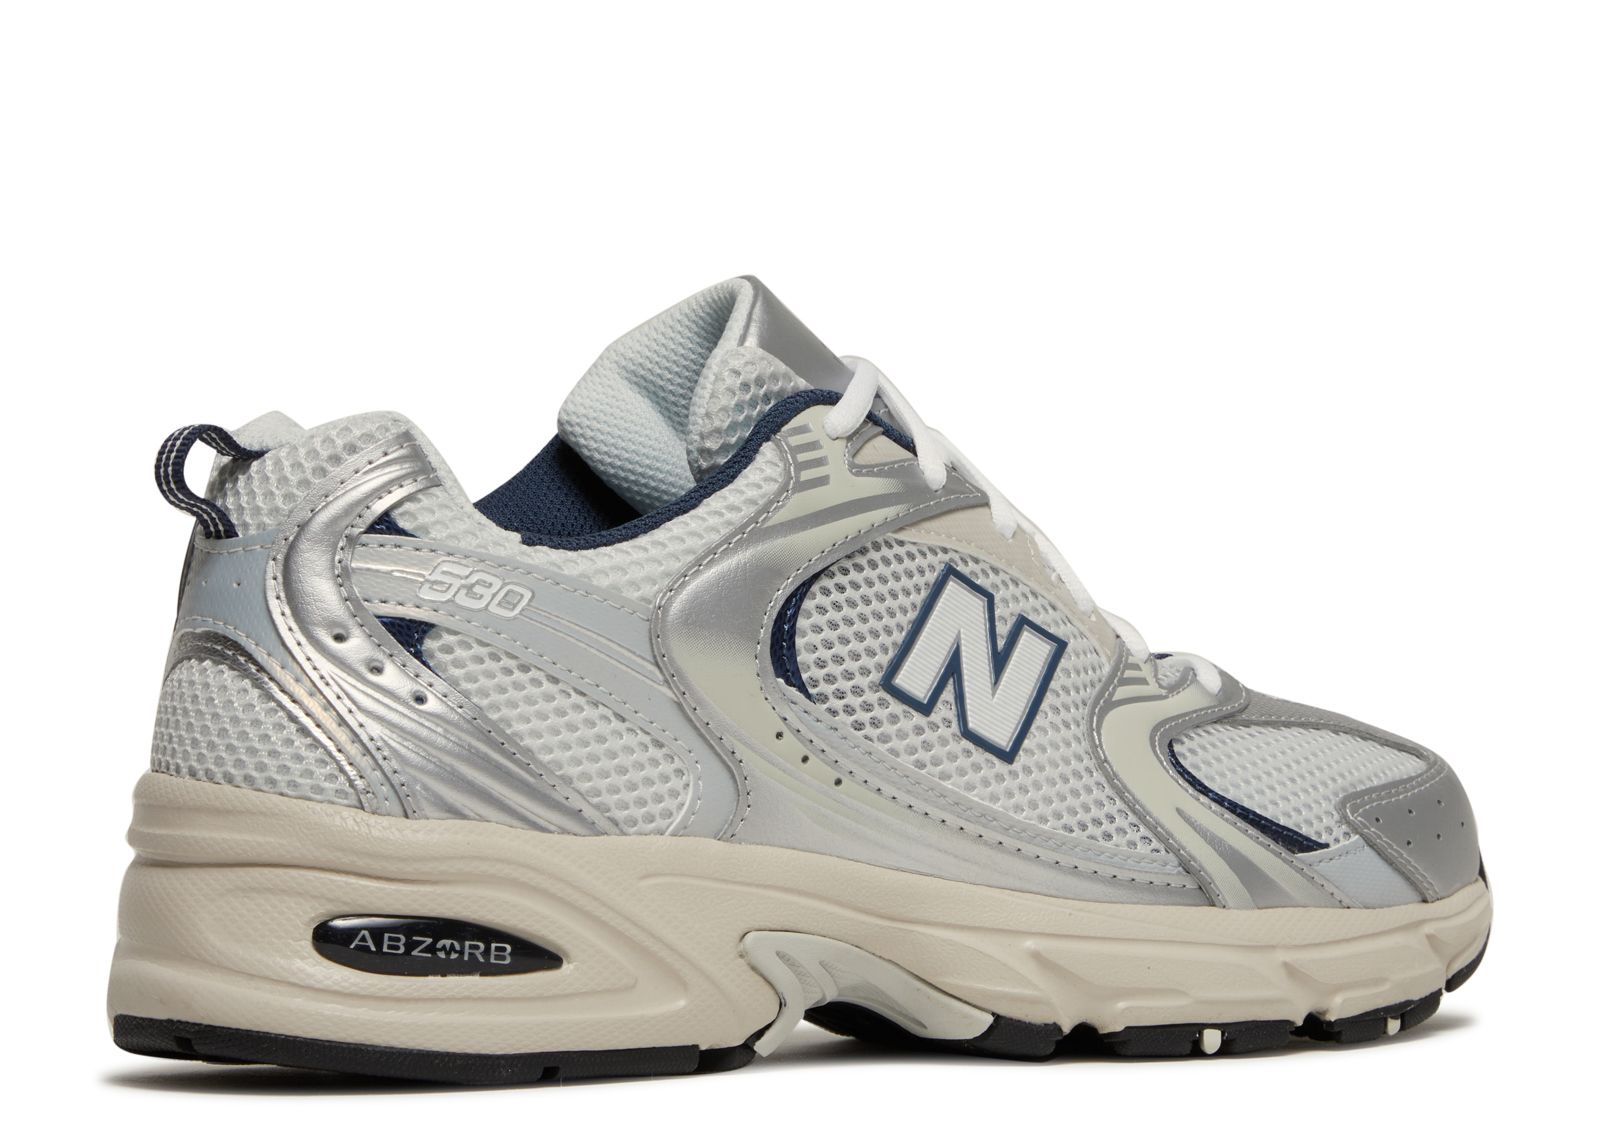 New Balance 530 Retro Steel Grey Running Shoes MR530KA Men's